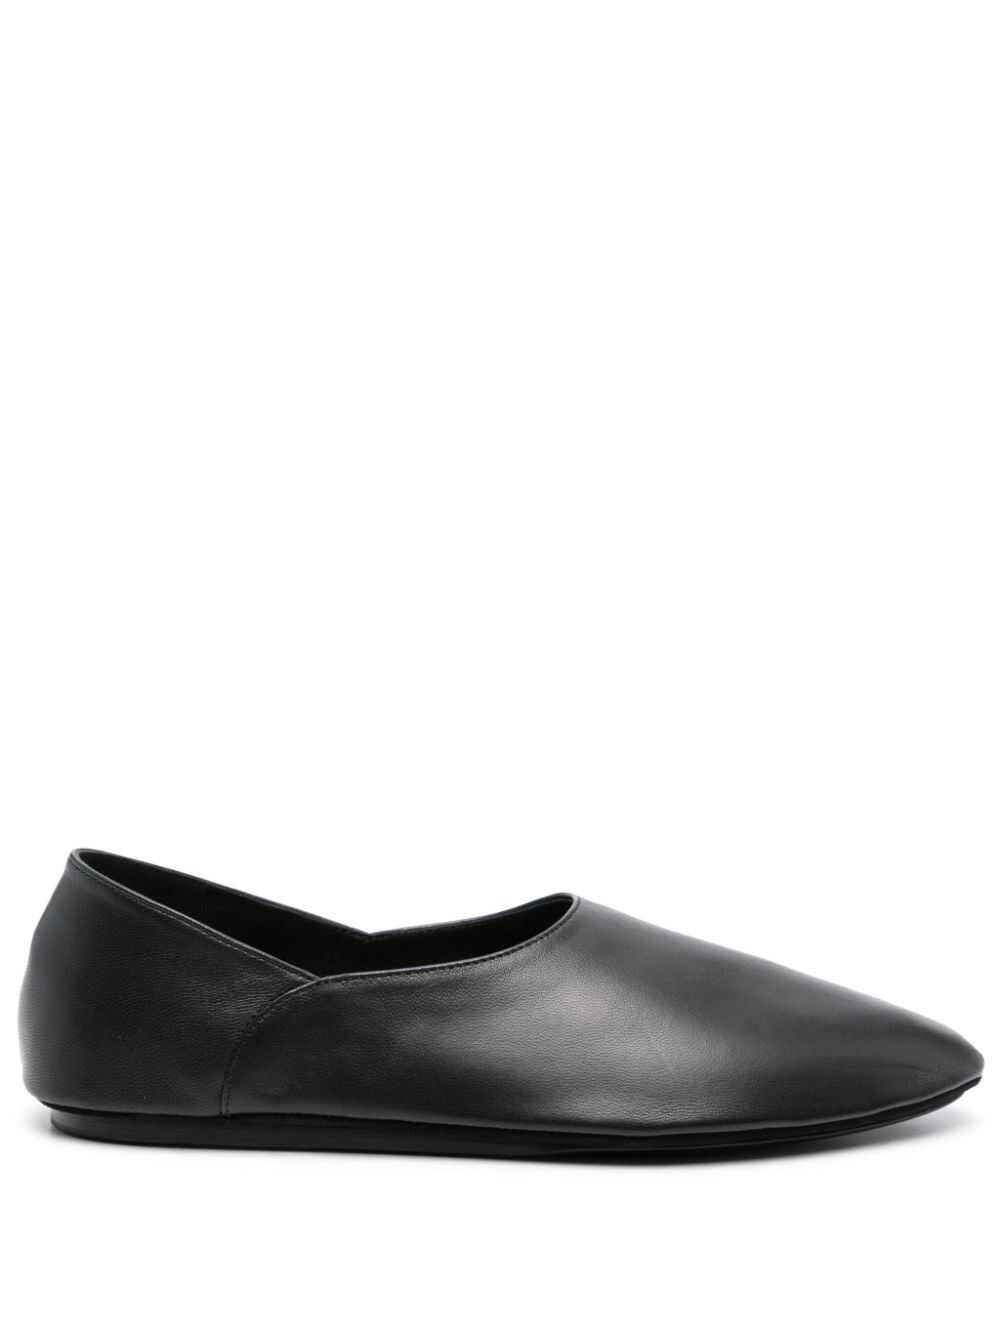 Poze Jil Sander Flat Shoes Black Black